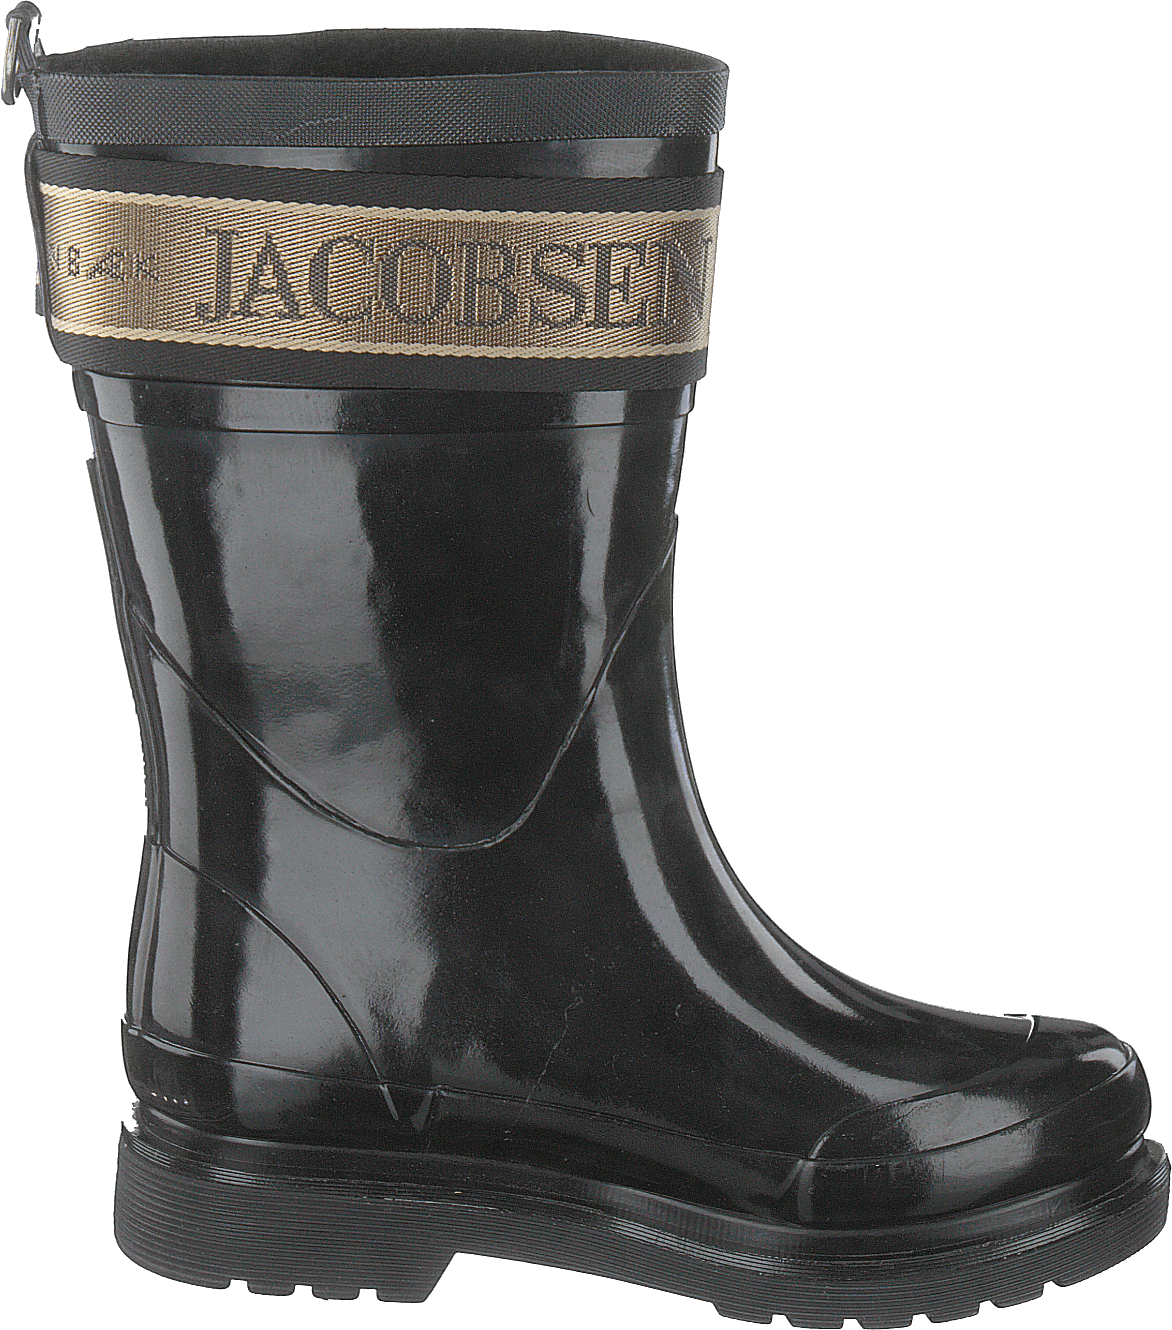 3/4 Rubber Boots Black